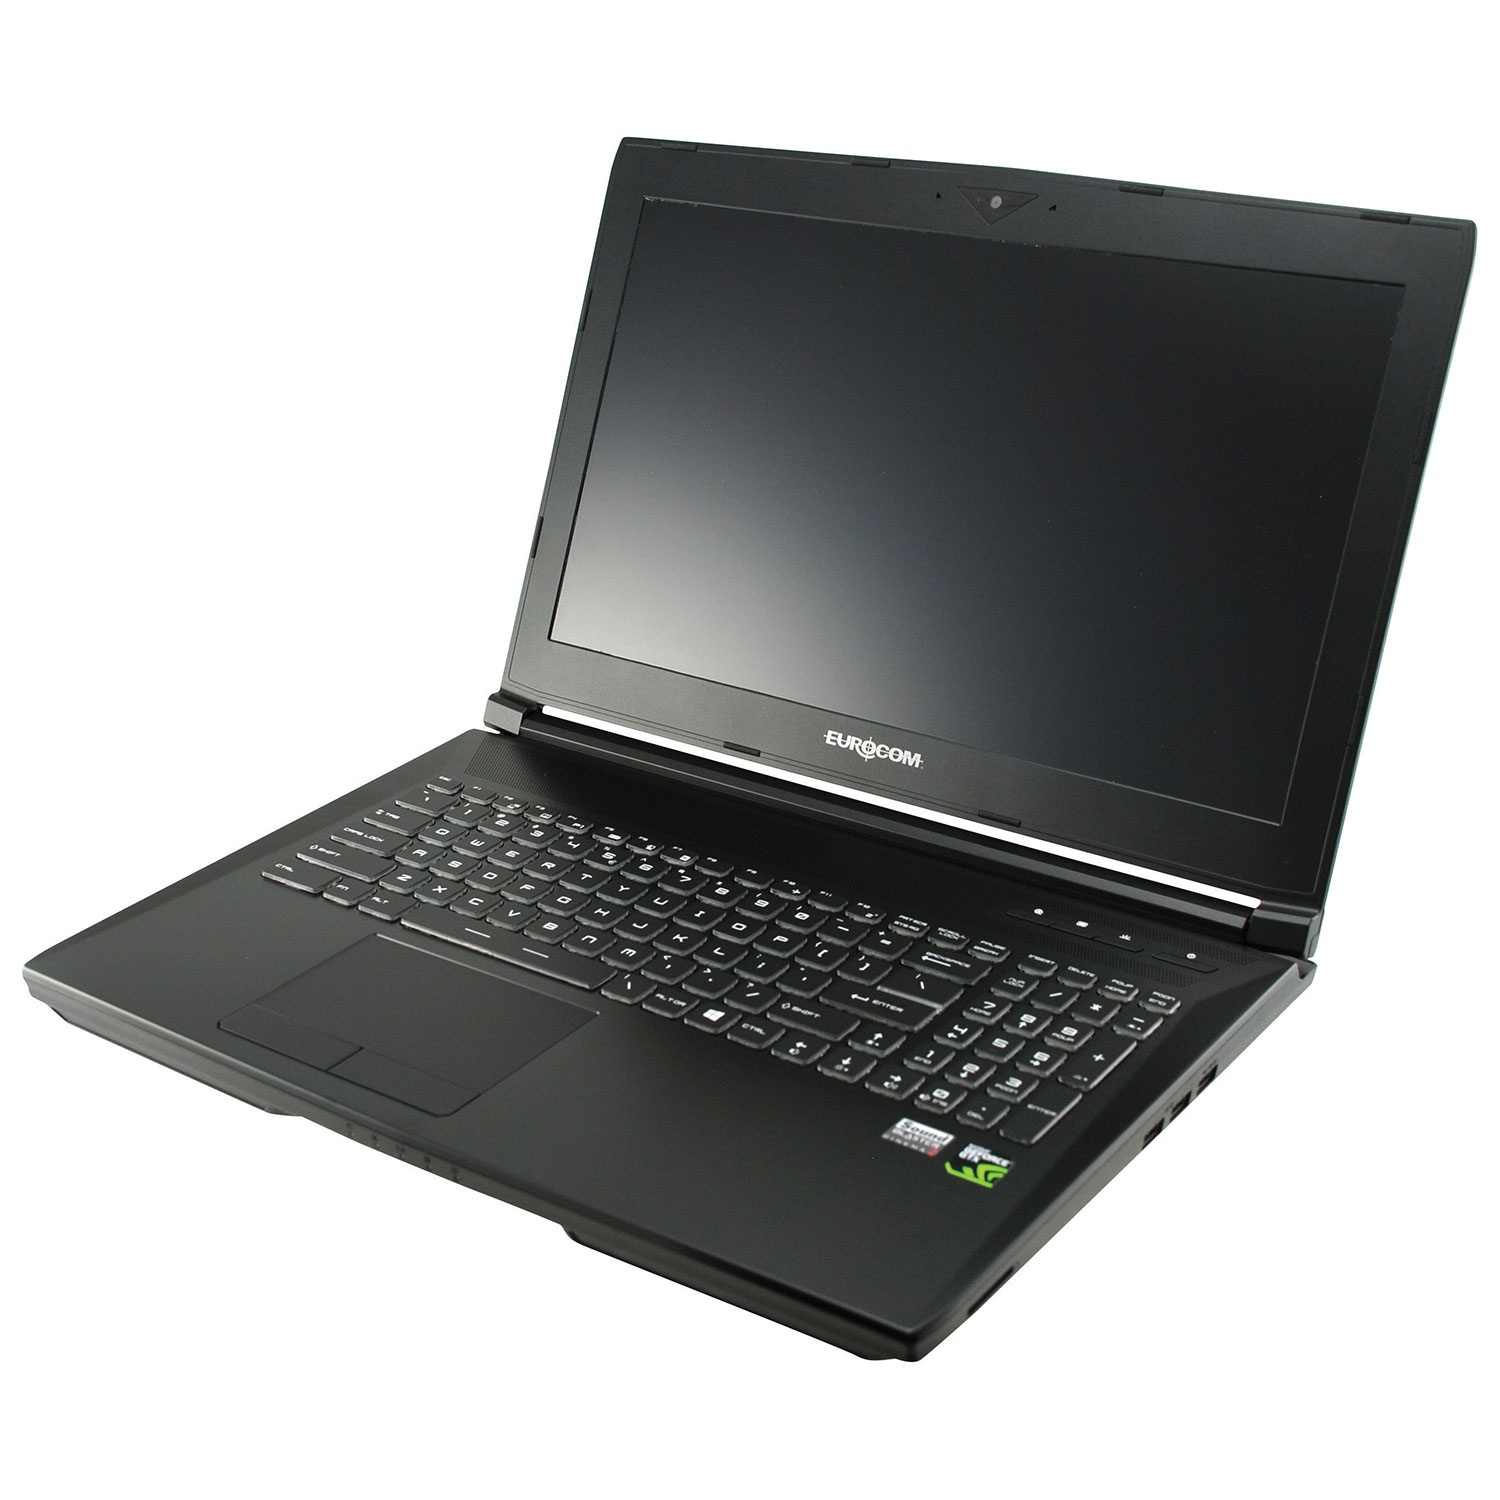 Eurocom Tornado F5 gaming laptop